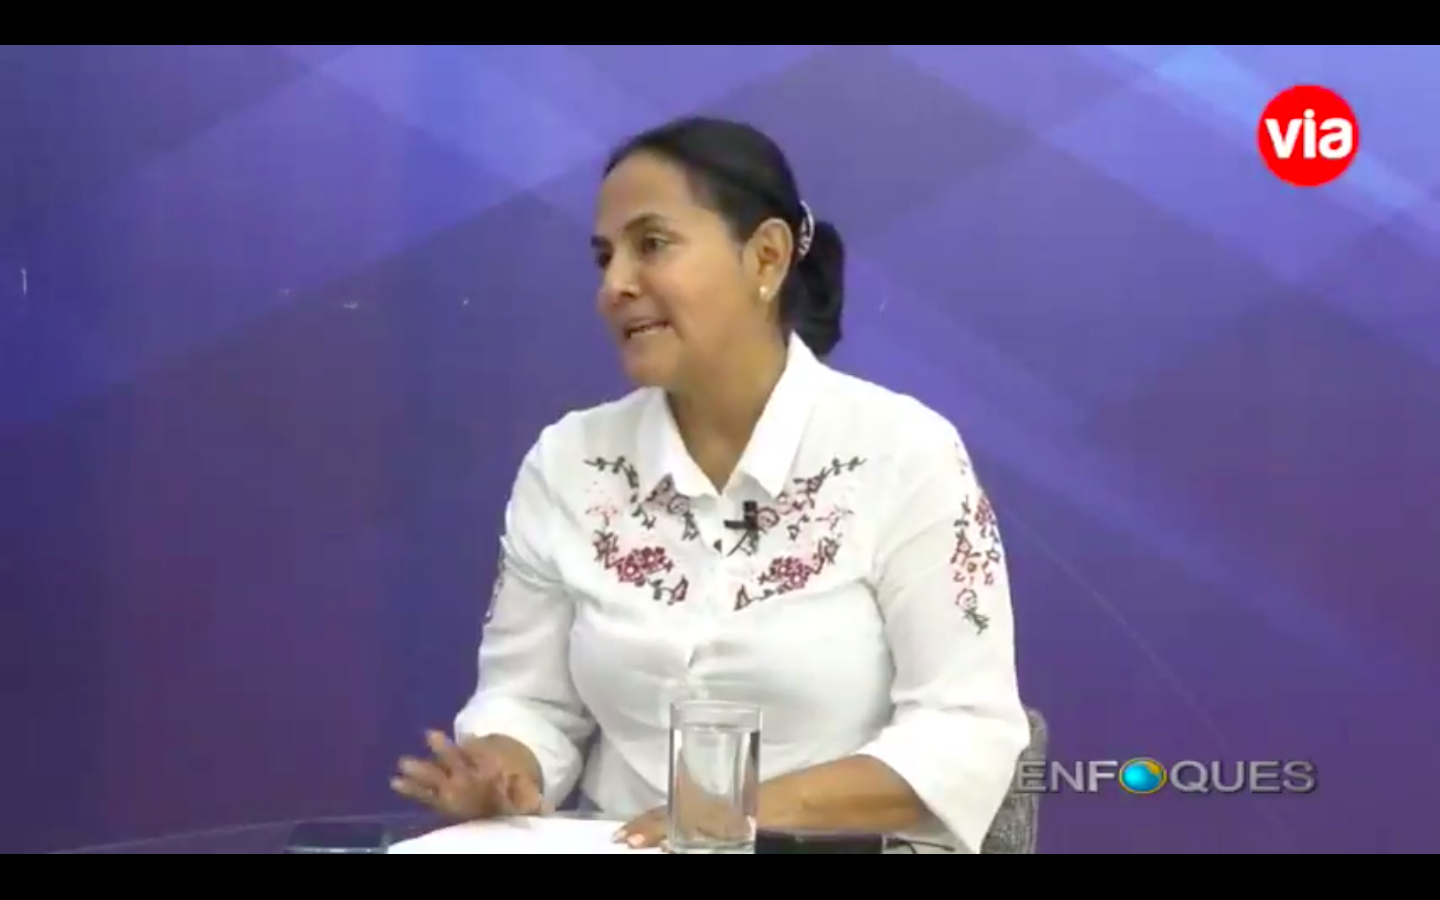  Entrevista la Sra. Robertina Santillana, congresista electa por San Martín.